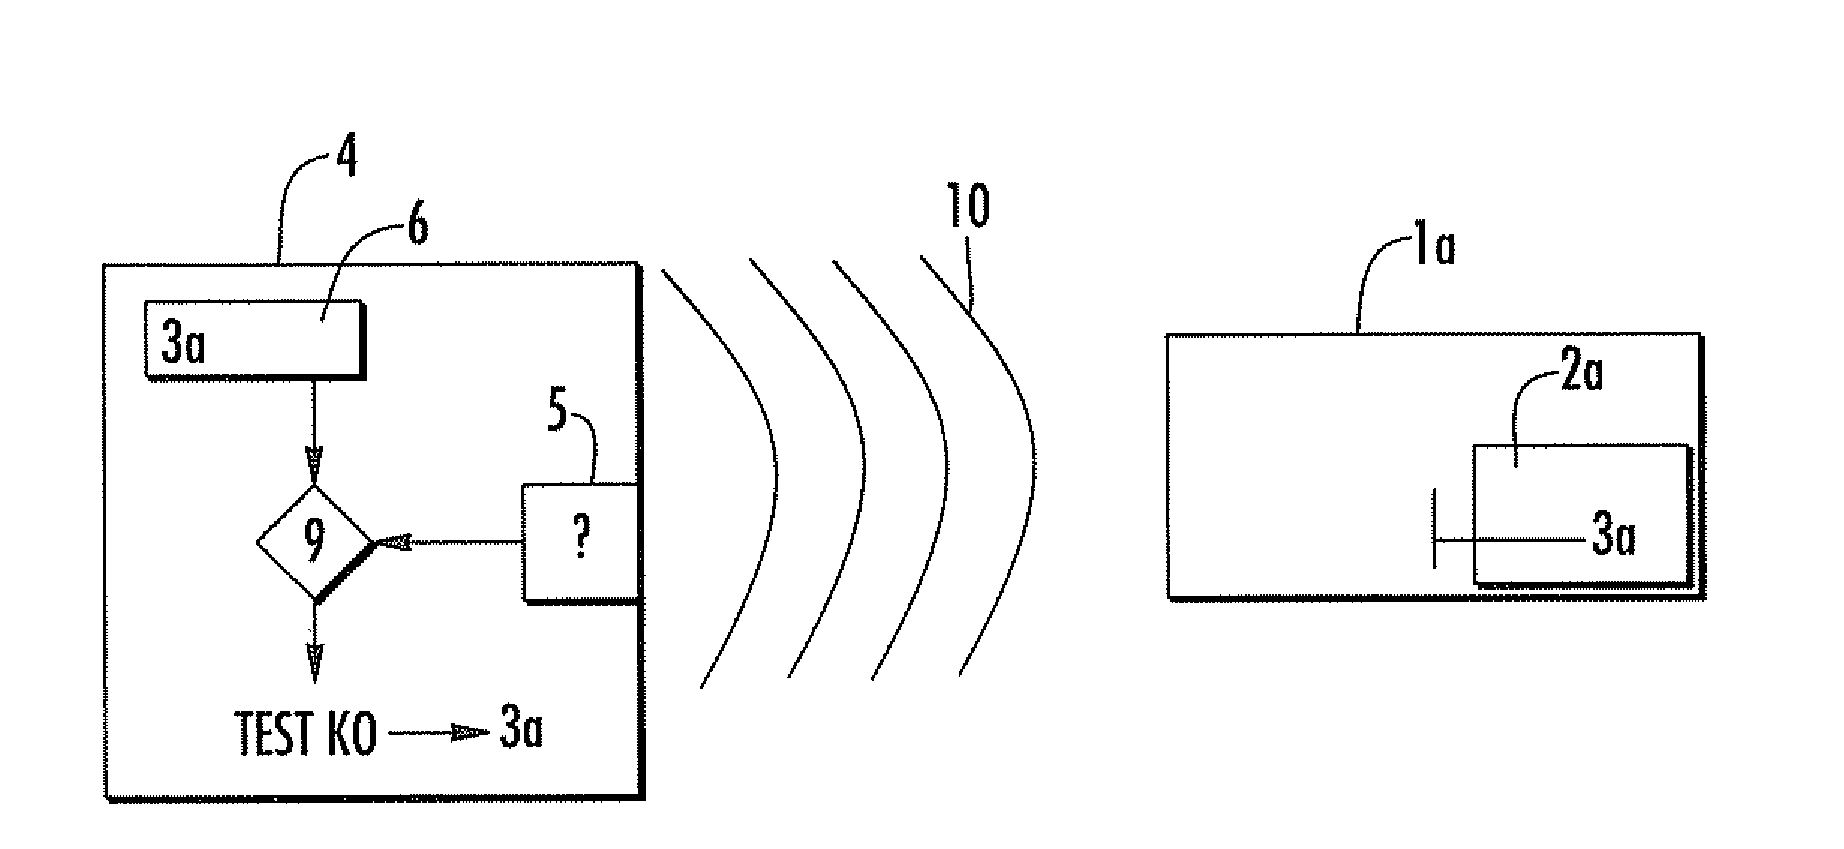 Testing method of an IC card including a zigbee device